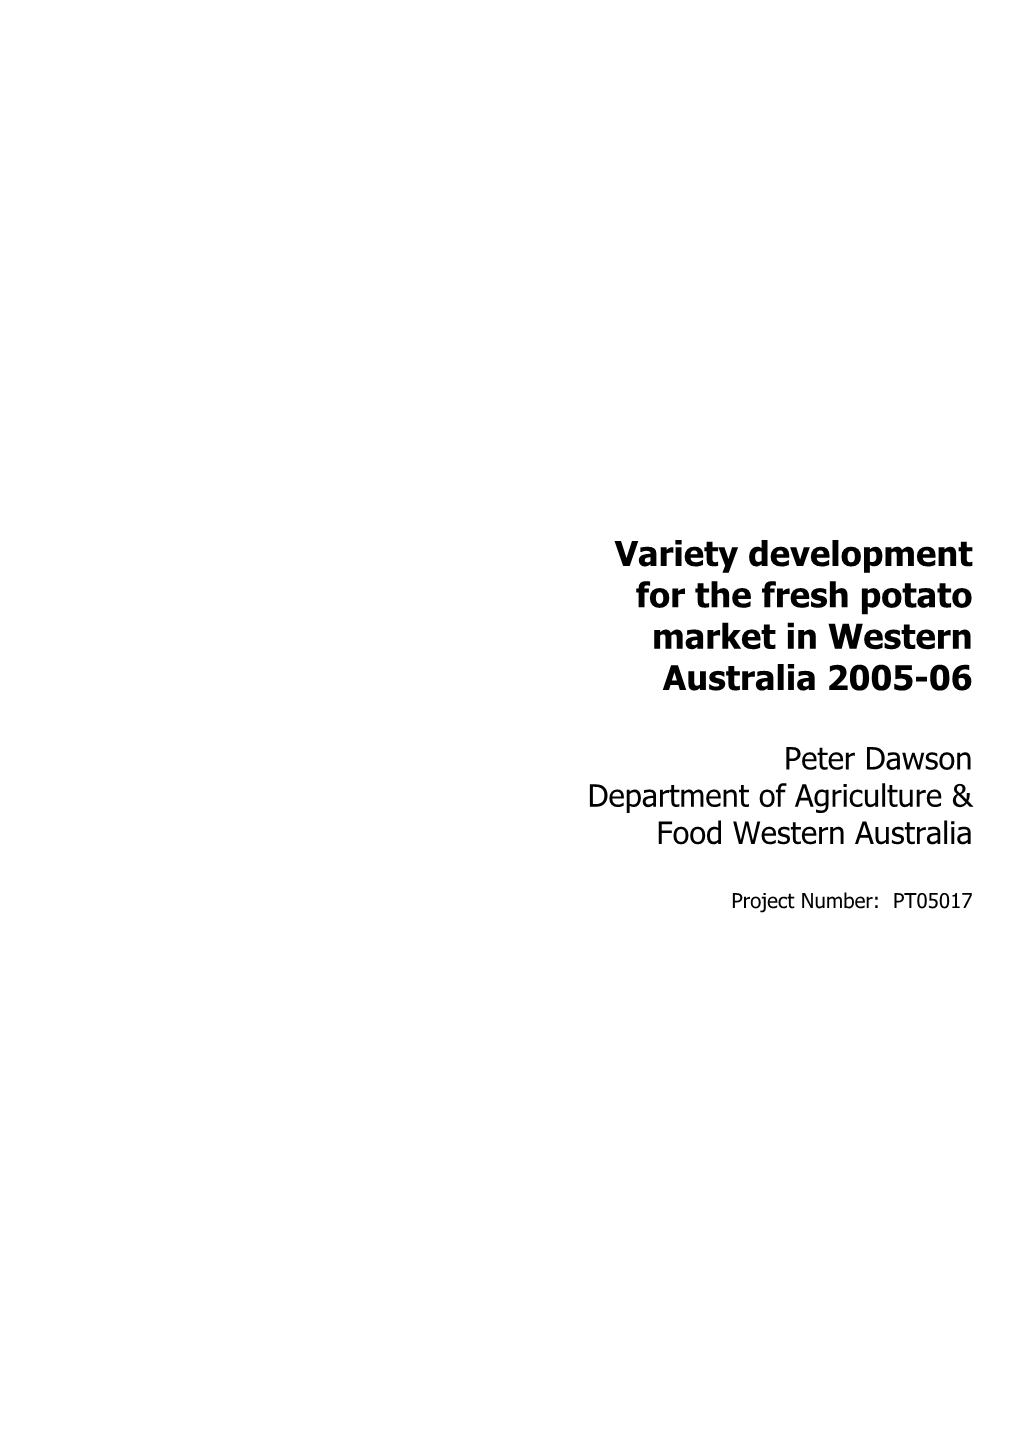 Variety Development for the Fresh Potato Market in Western Australia 2005-06